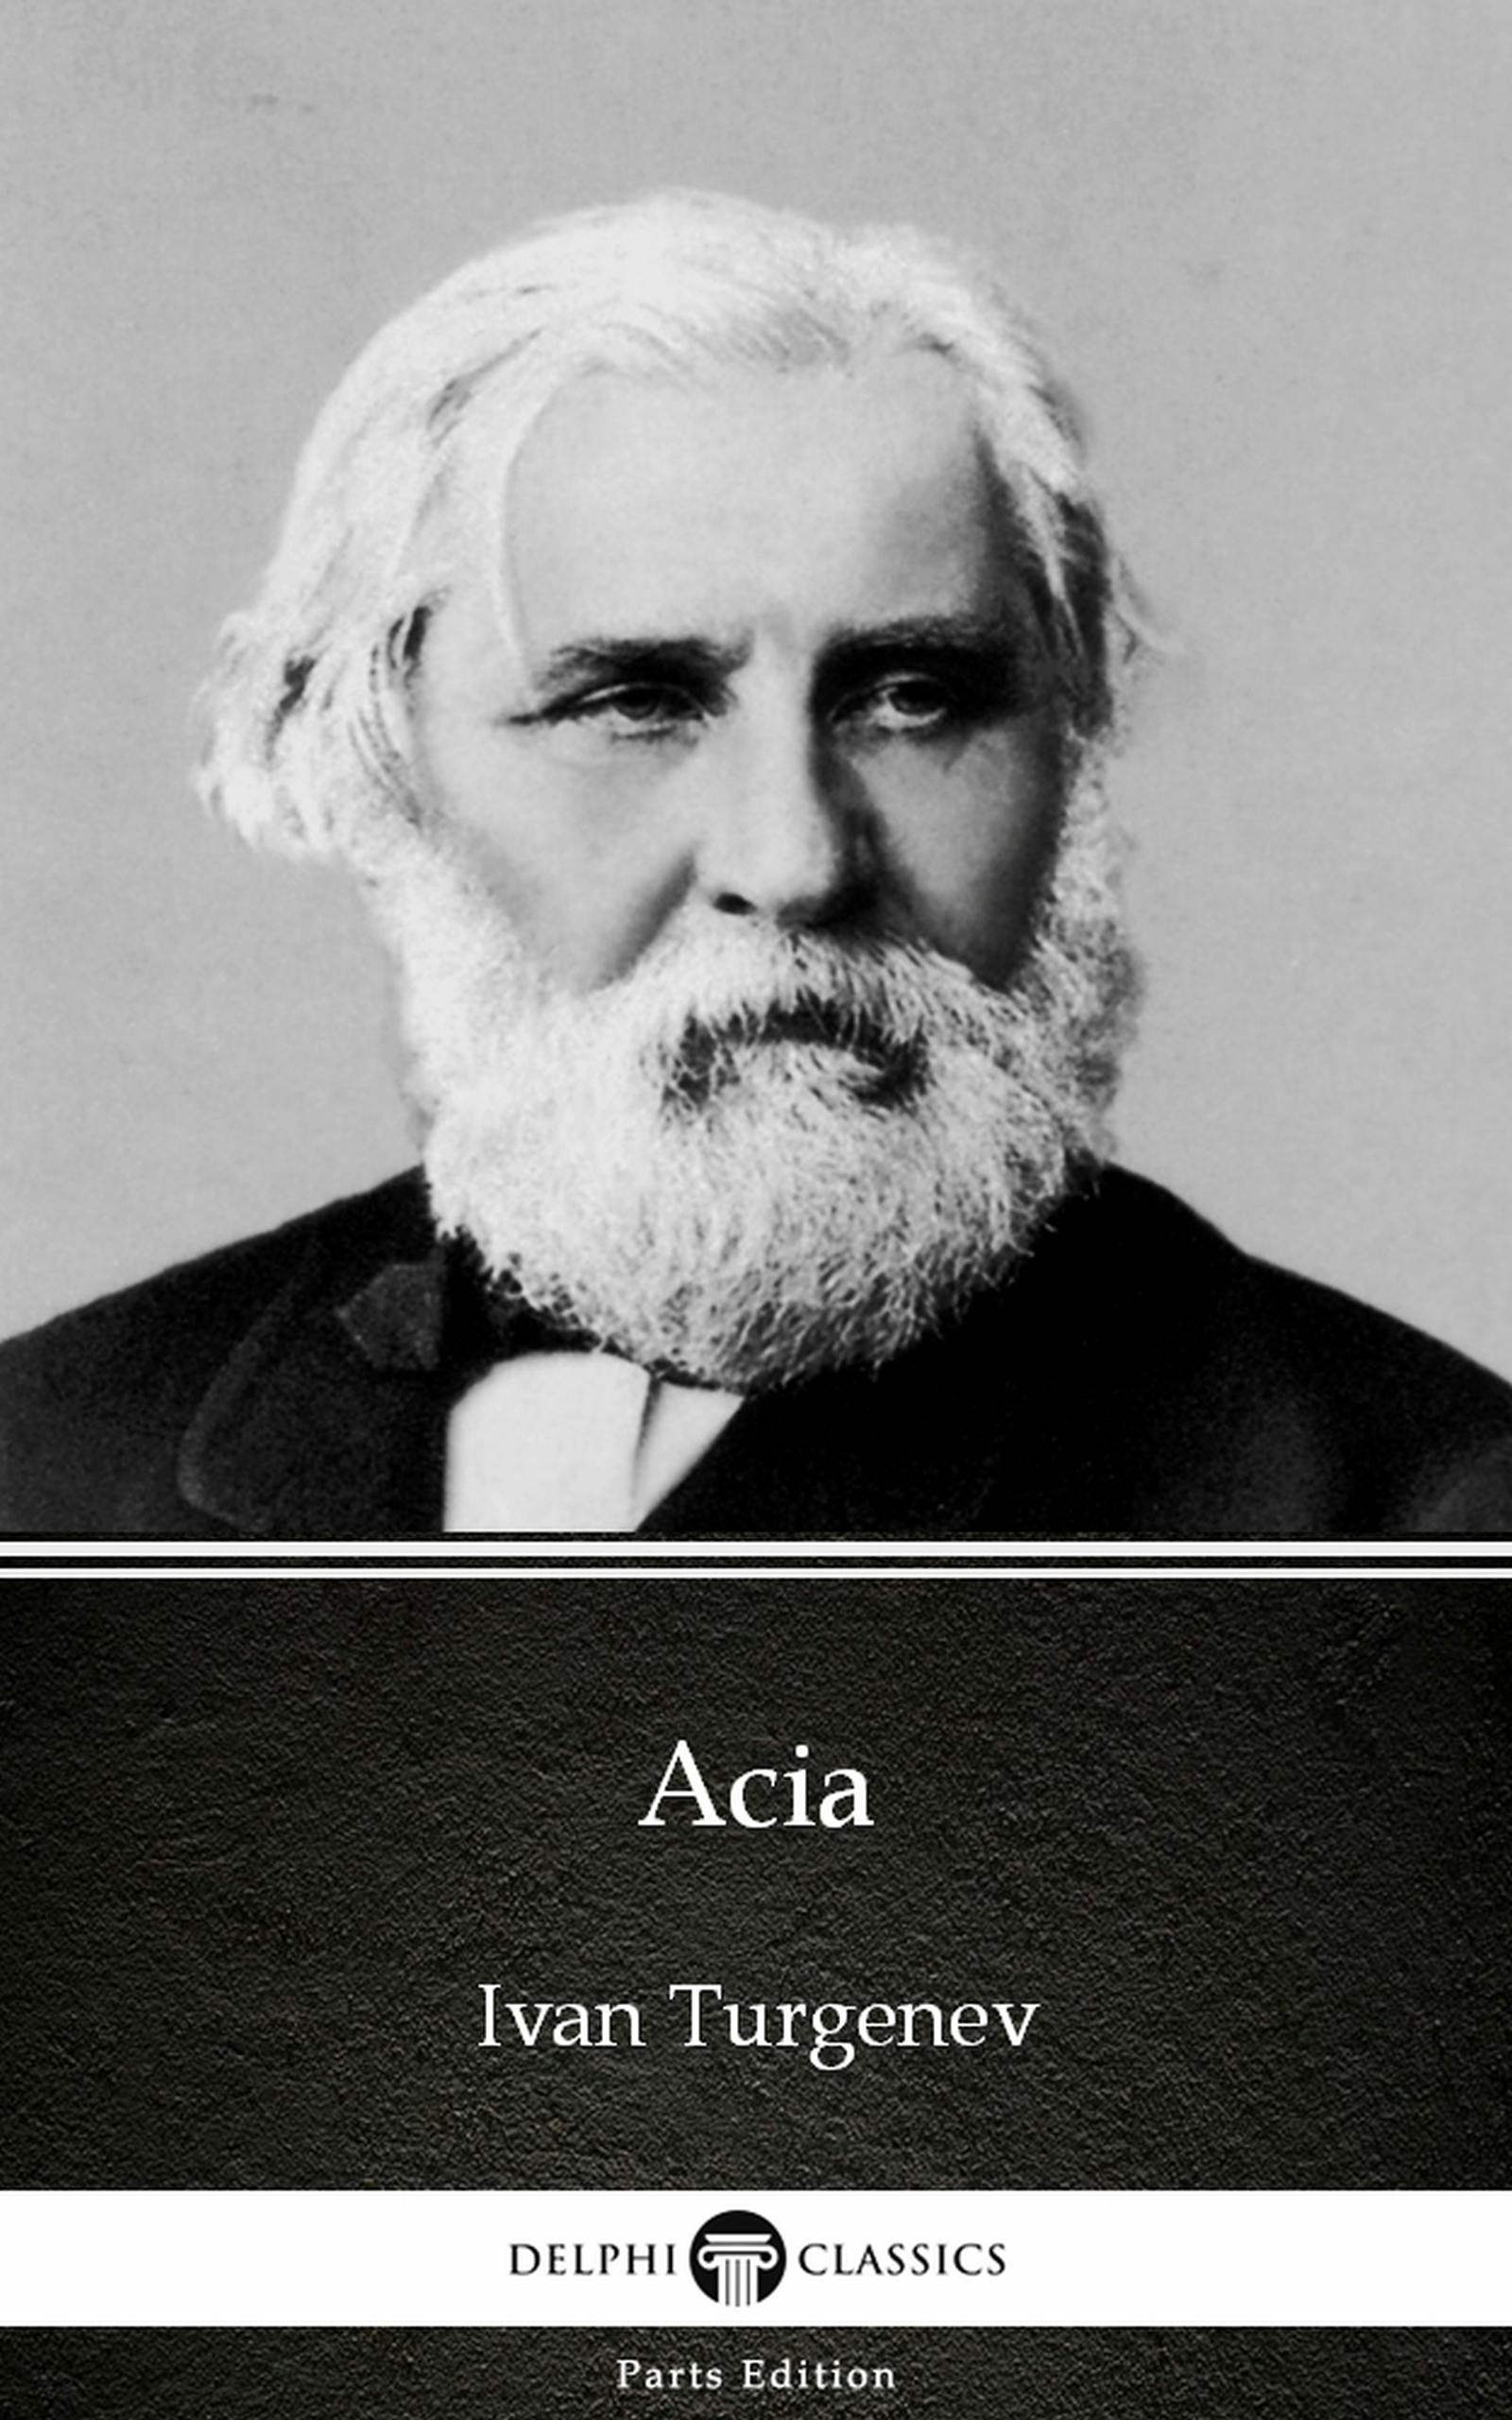 Acia by Ivan Turgenev - Delphi Classics (Illustrated) - Ivan Turgenev